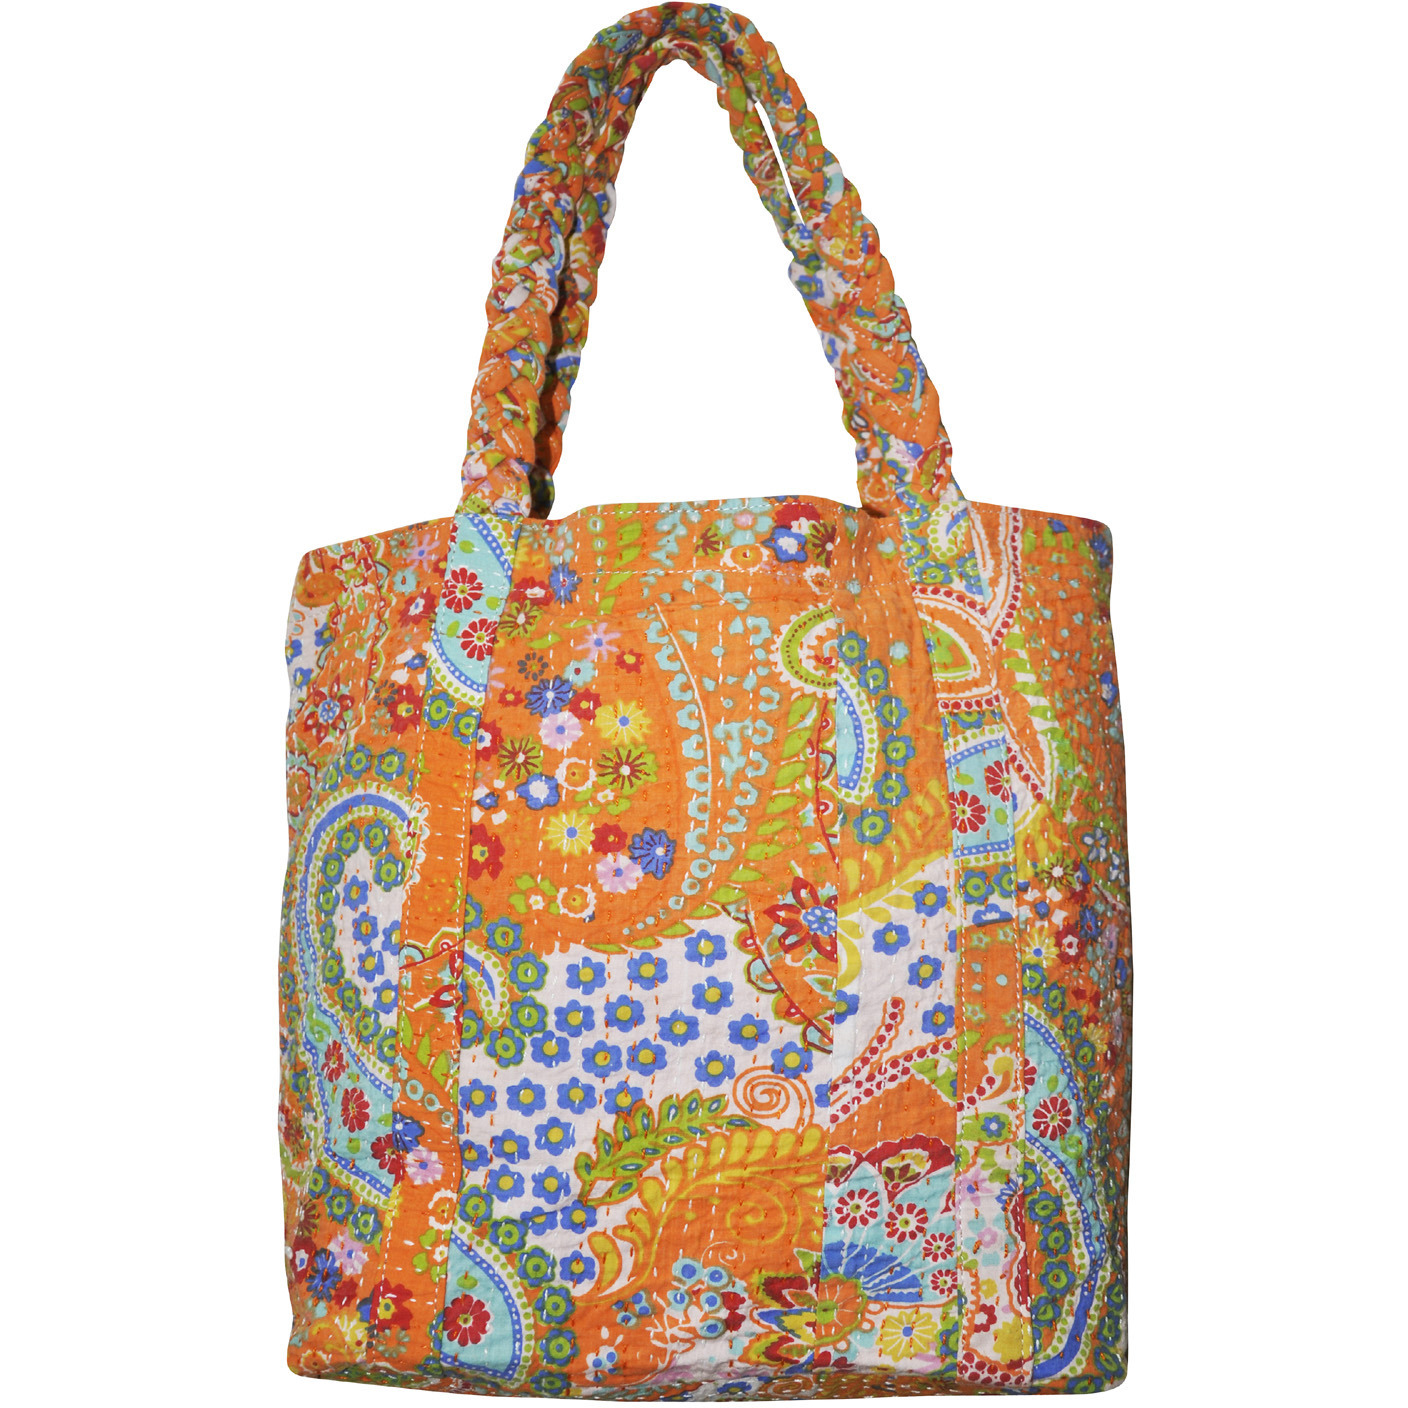 New Tote Shopping Bag Floral Printed Gift Fashion Shoulder Handbag 18 Inch Women's